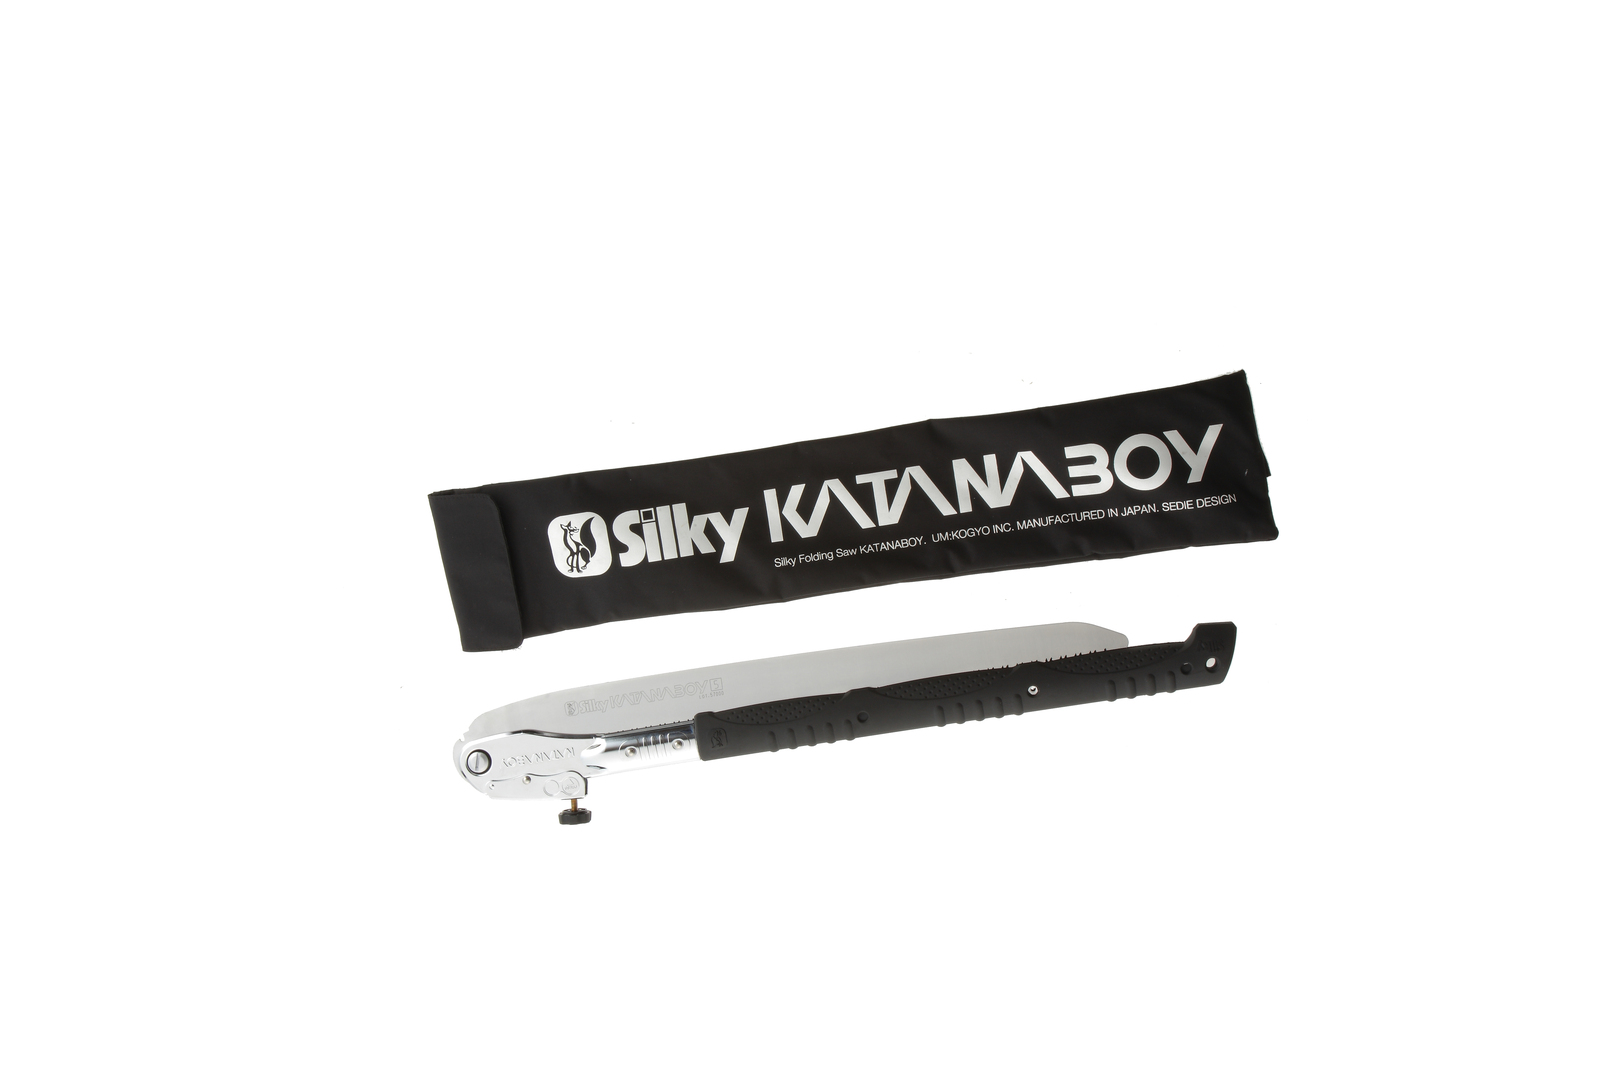 SILKY Katana Boy 500mm Folding Saw 403-50